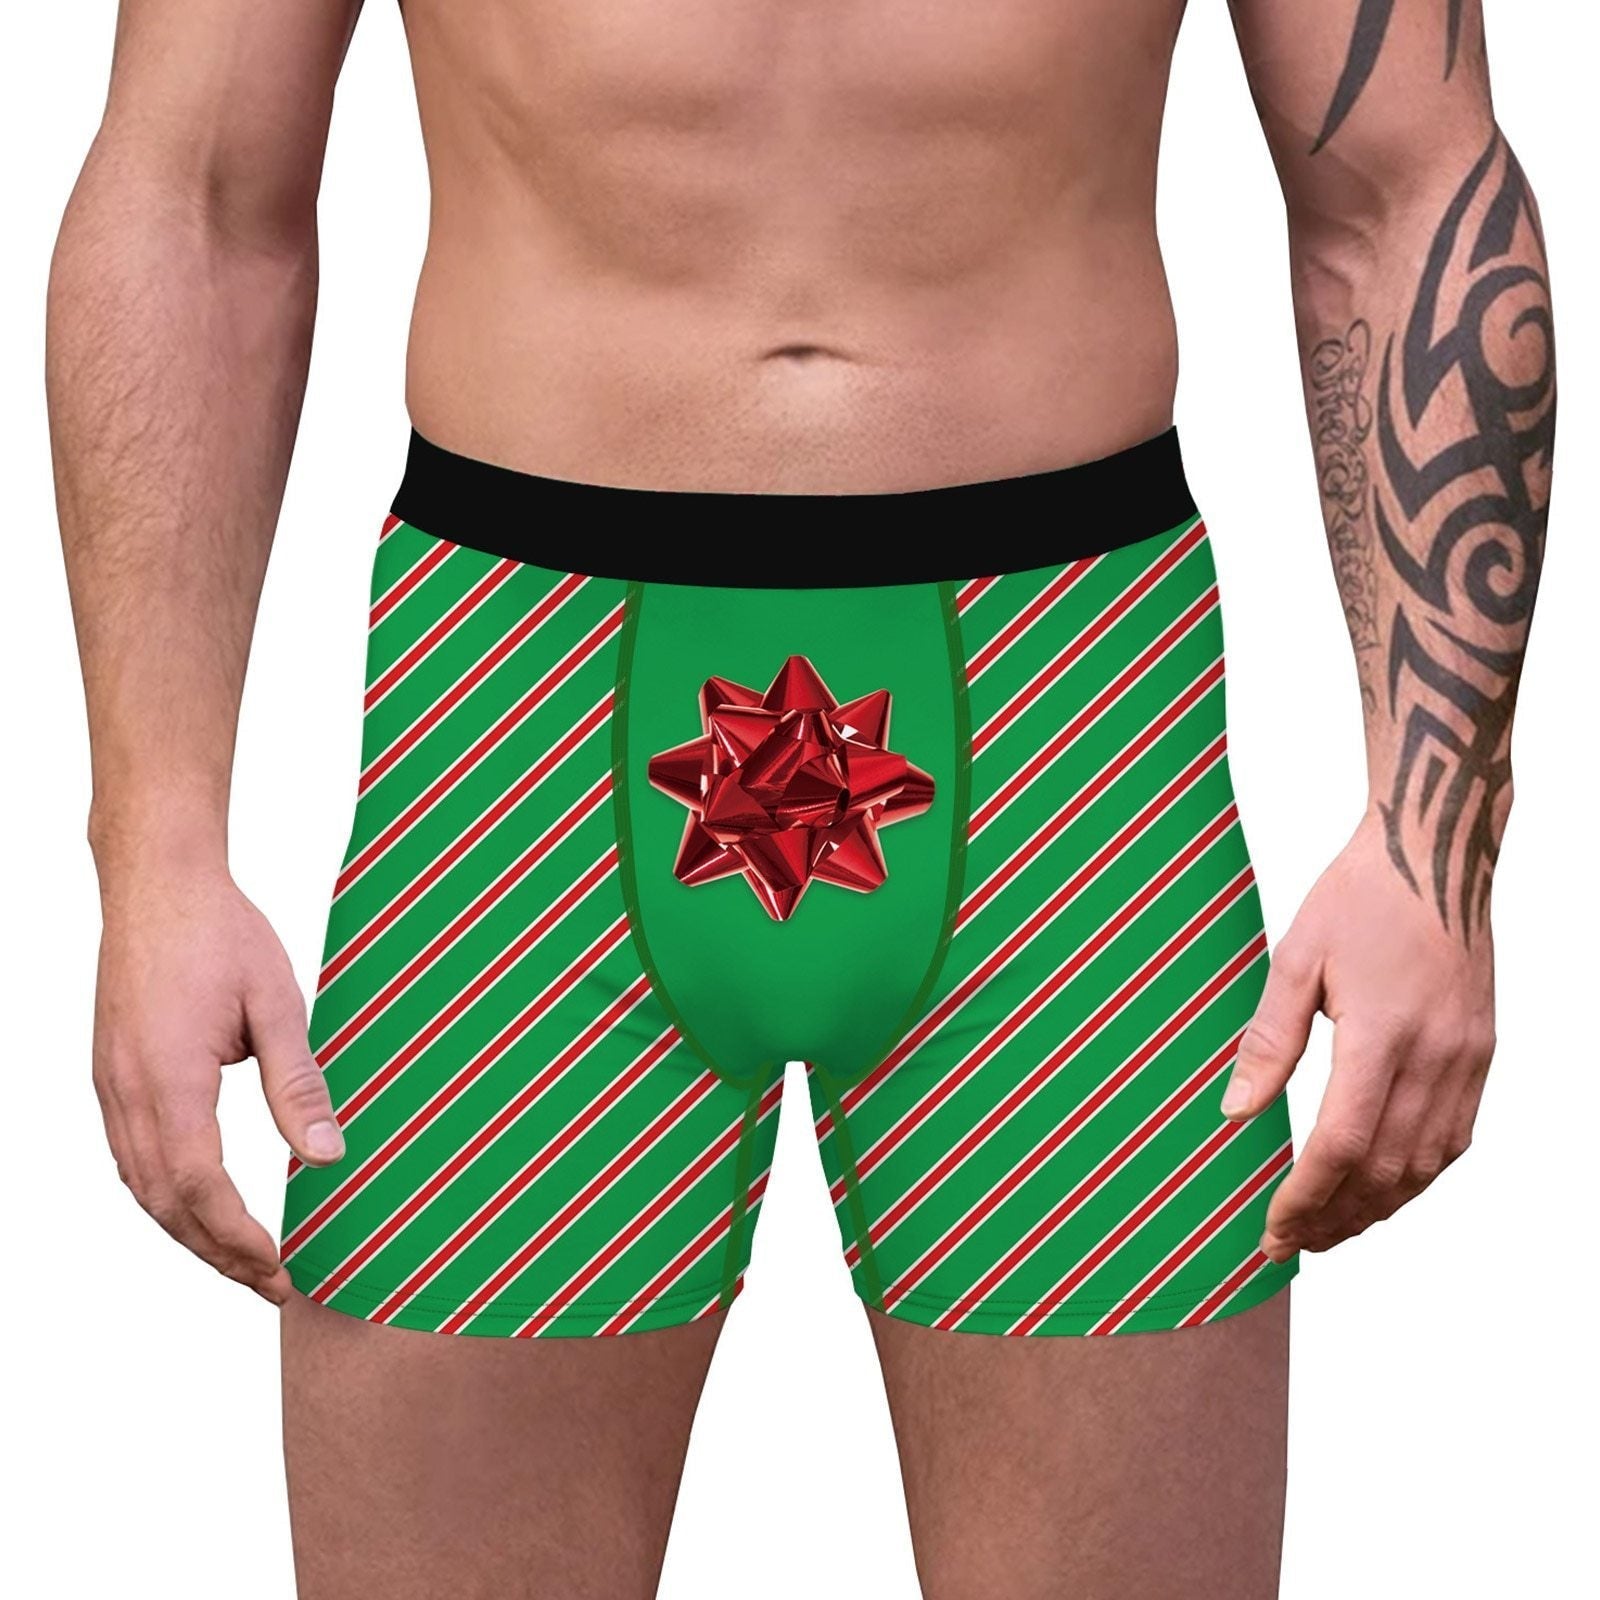 SALE - XMAS GIFT - Mens Christmas Diamond Printed Boxer Shorts with De